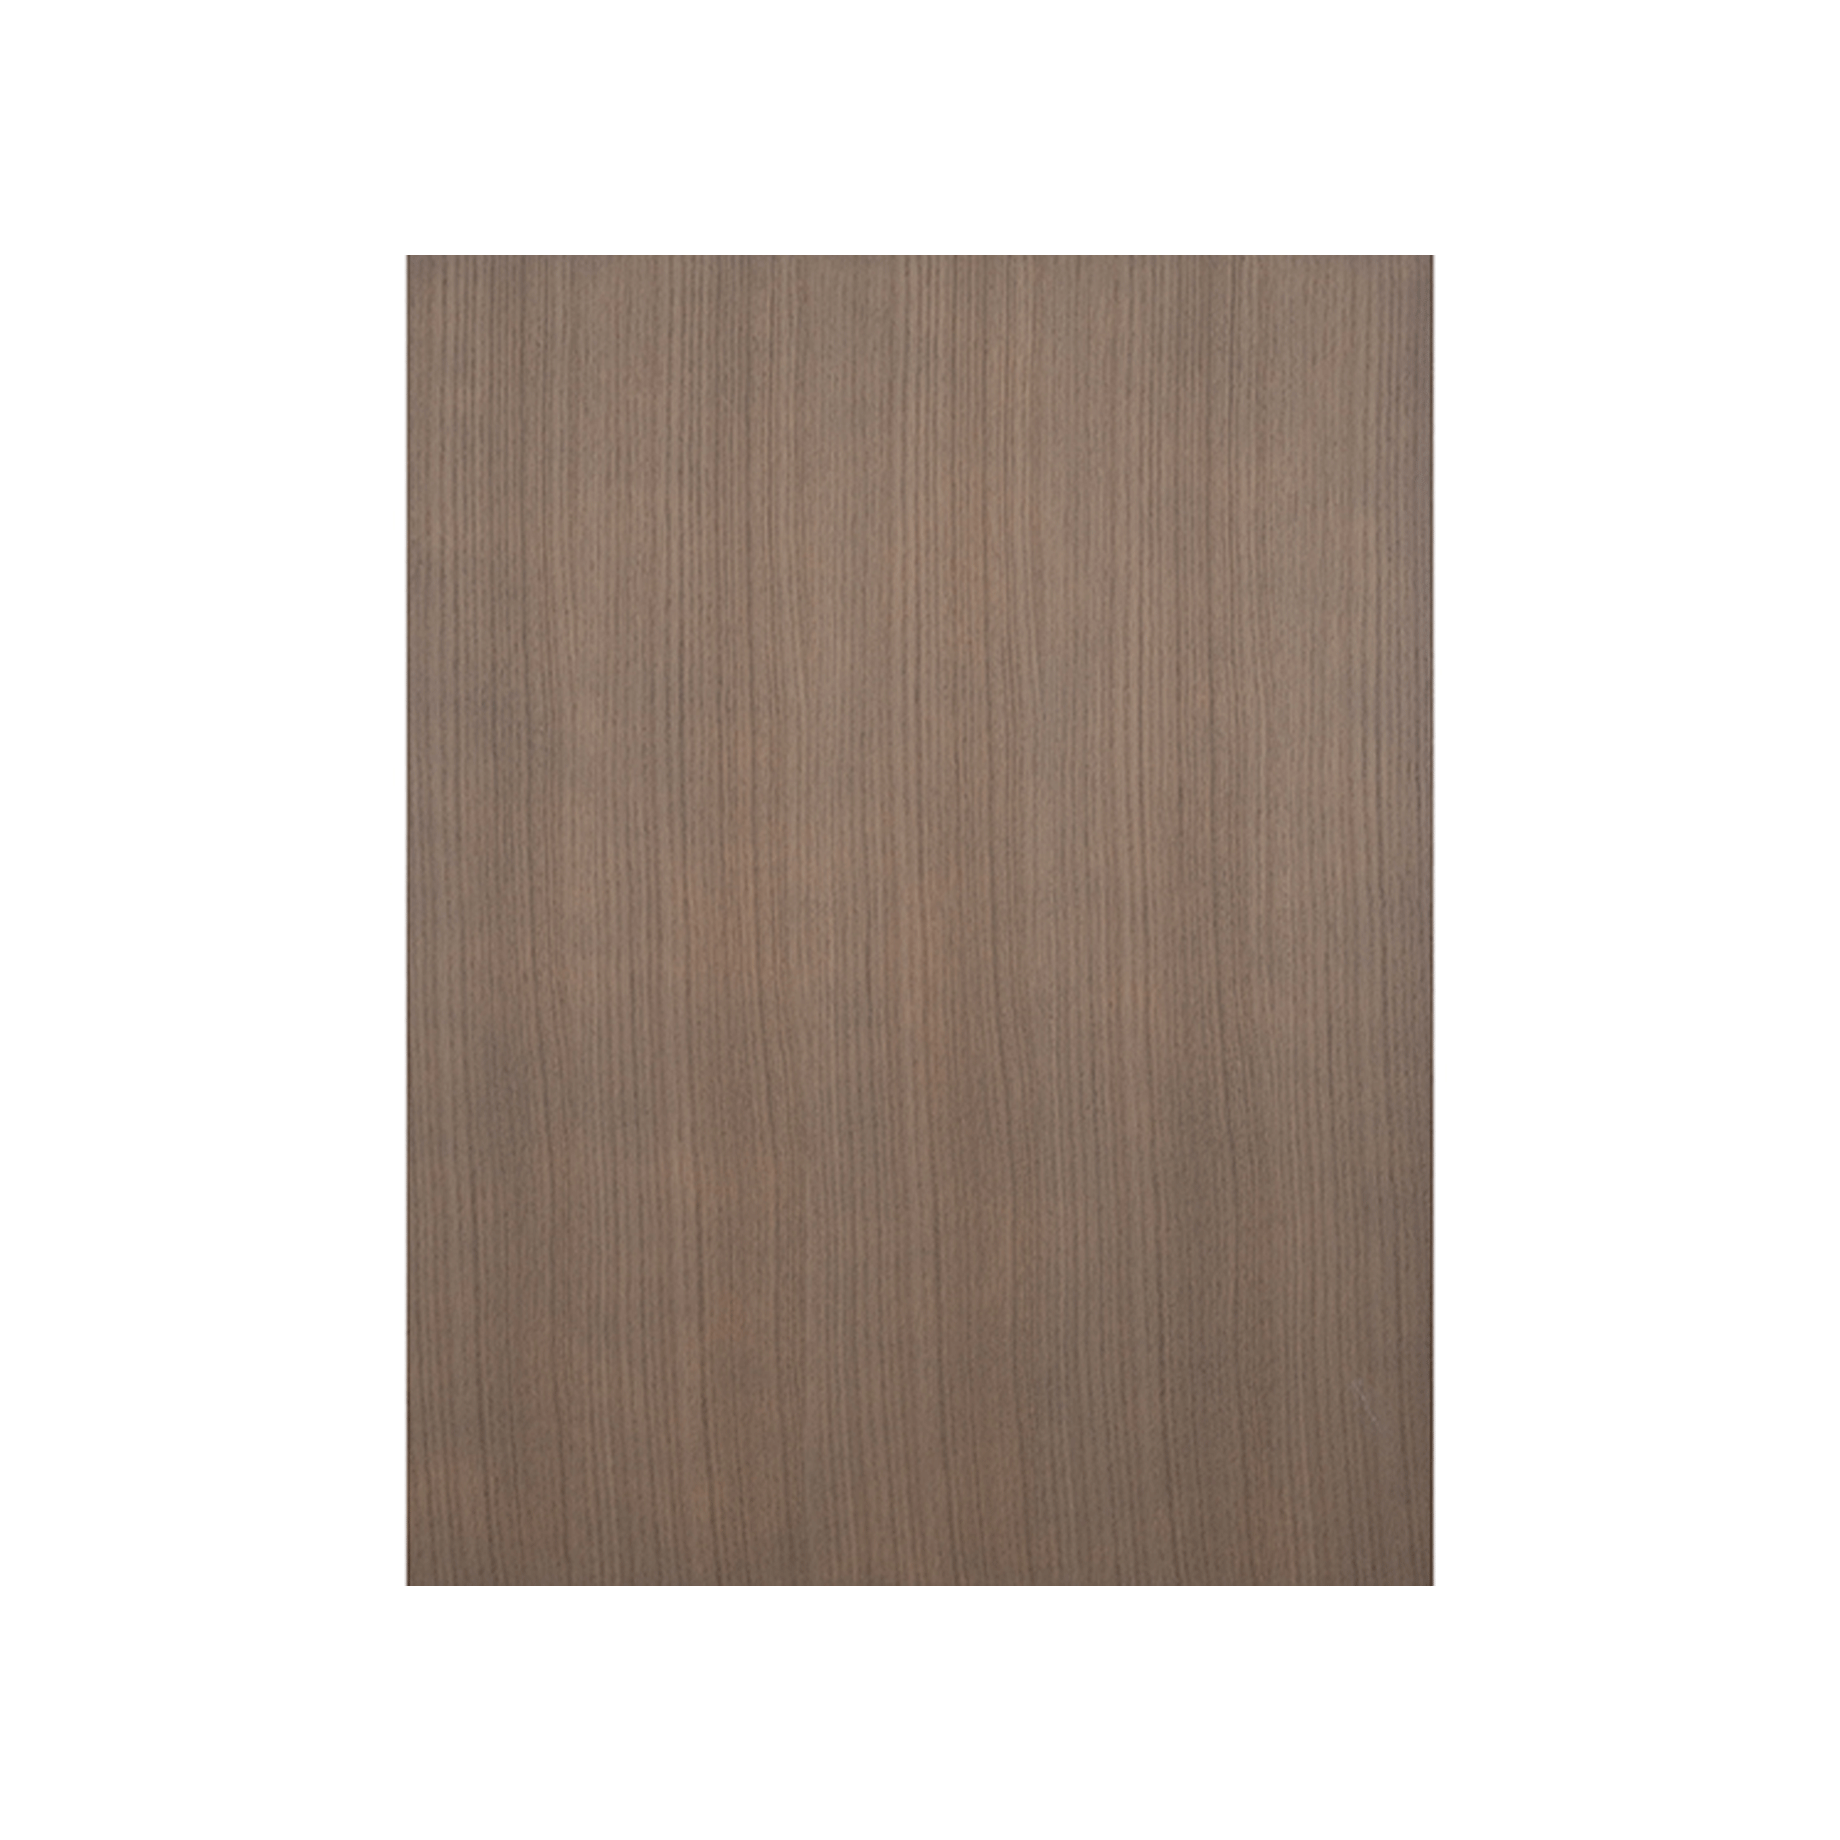 Contemporary Door Style, Wood Veneers in Rockville from Alladin Carpet and Floors